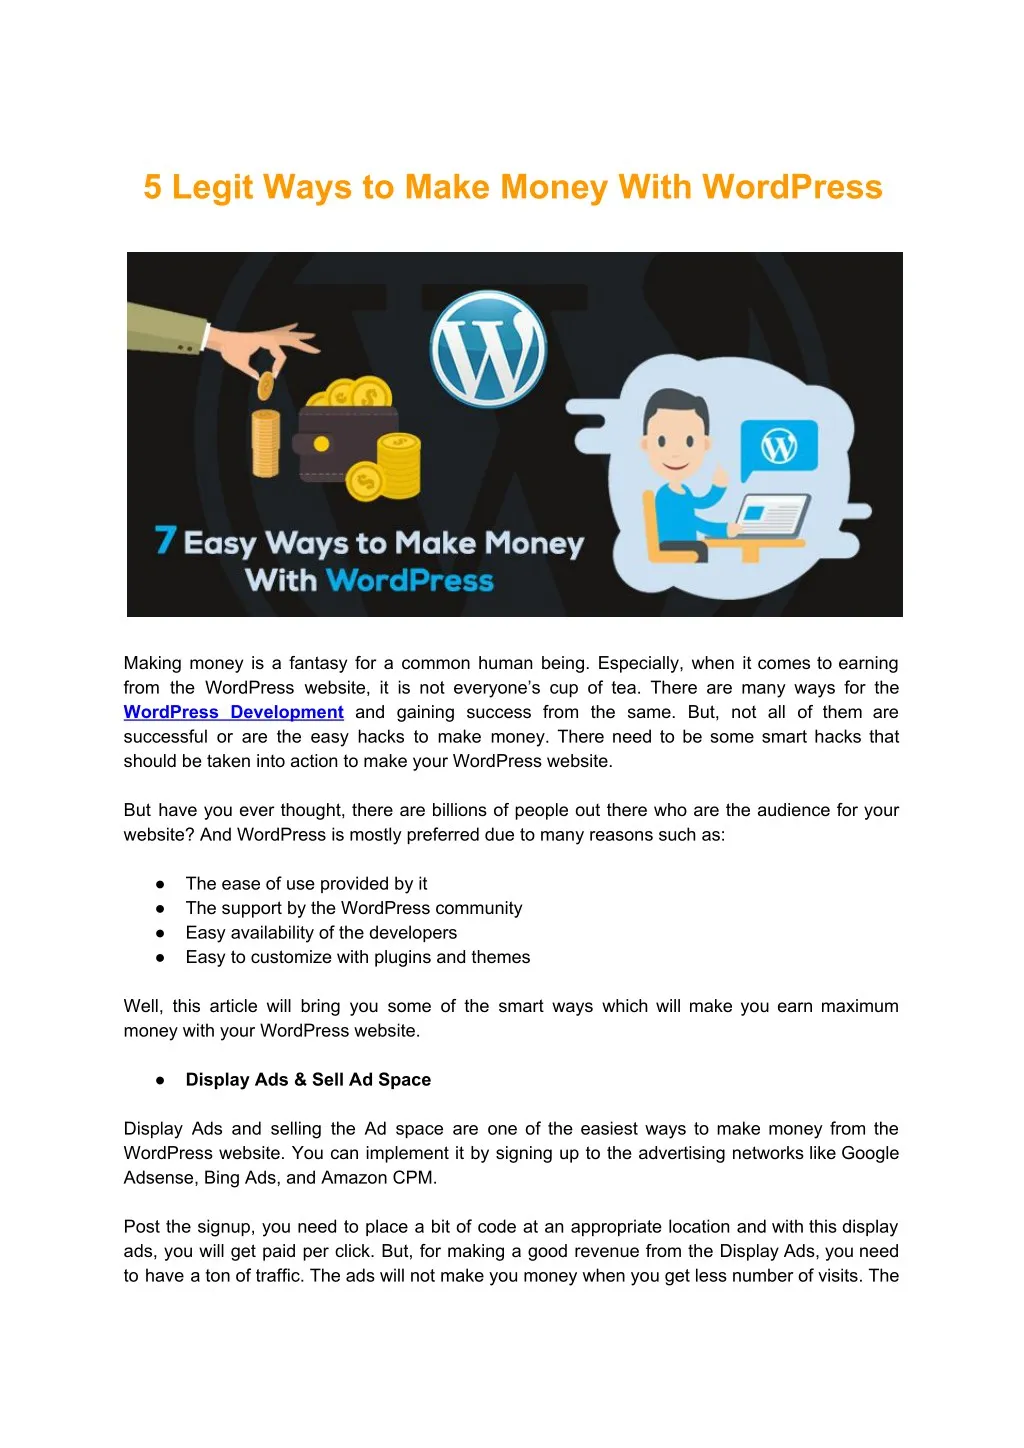 5 legit ways to make money with wordpress